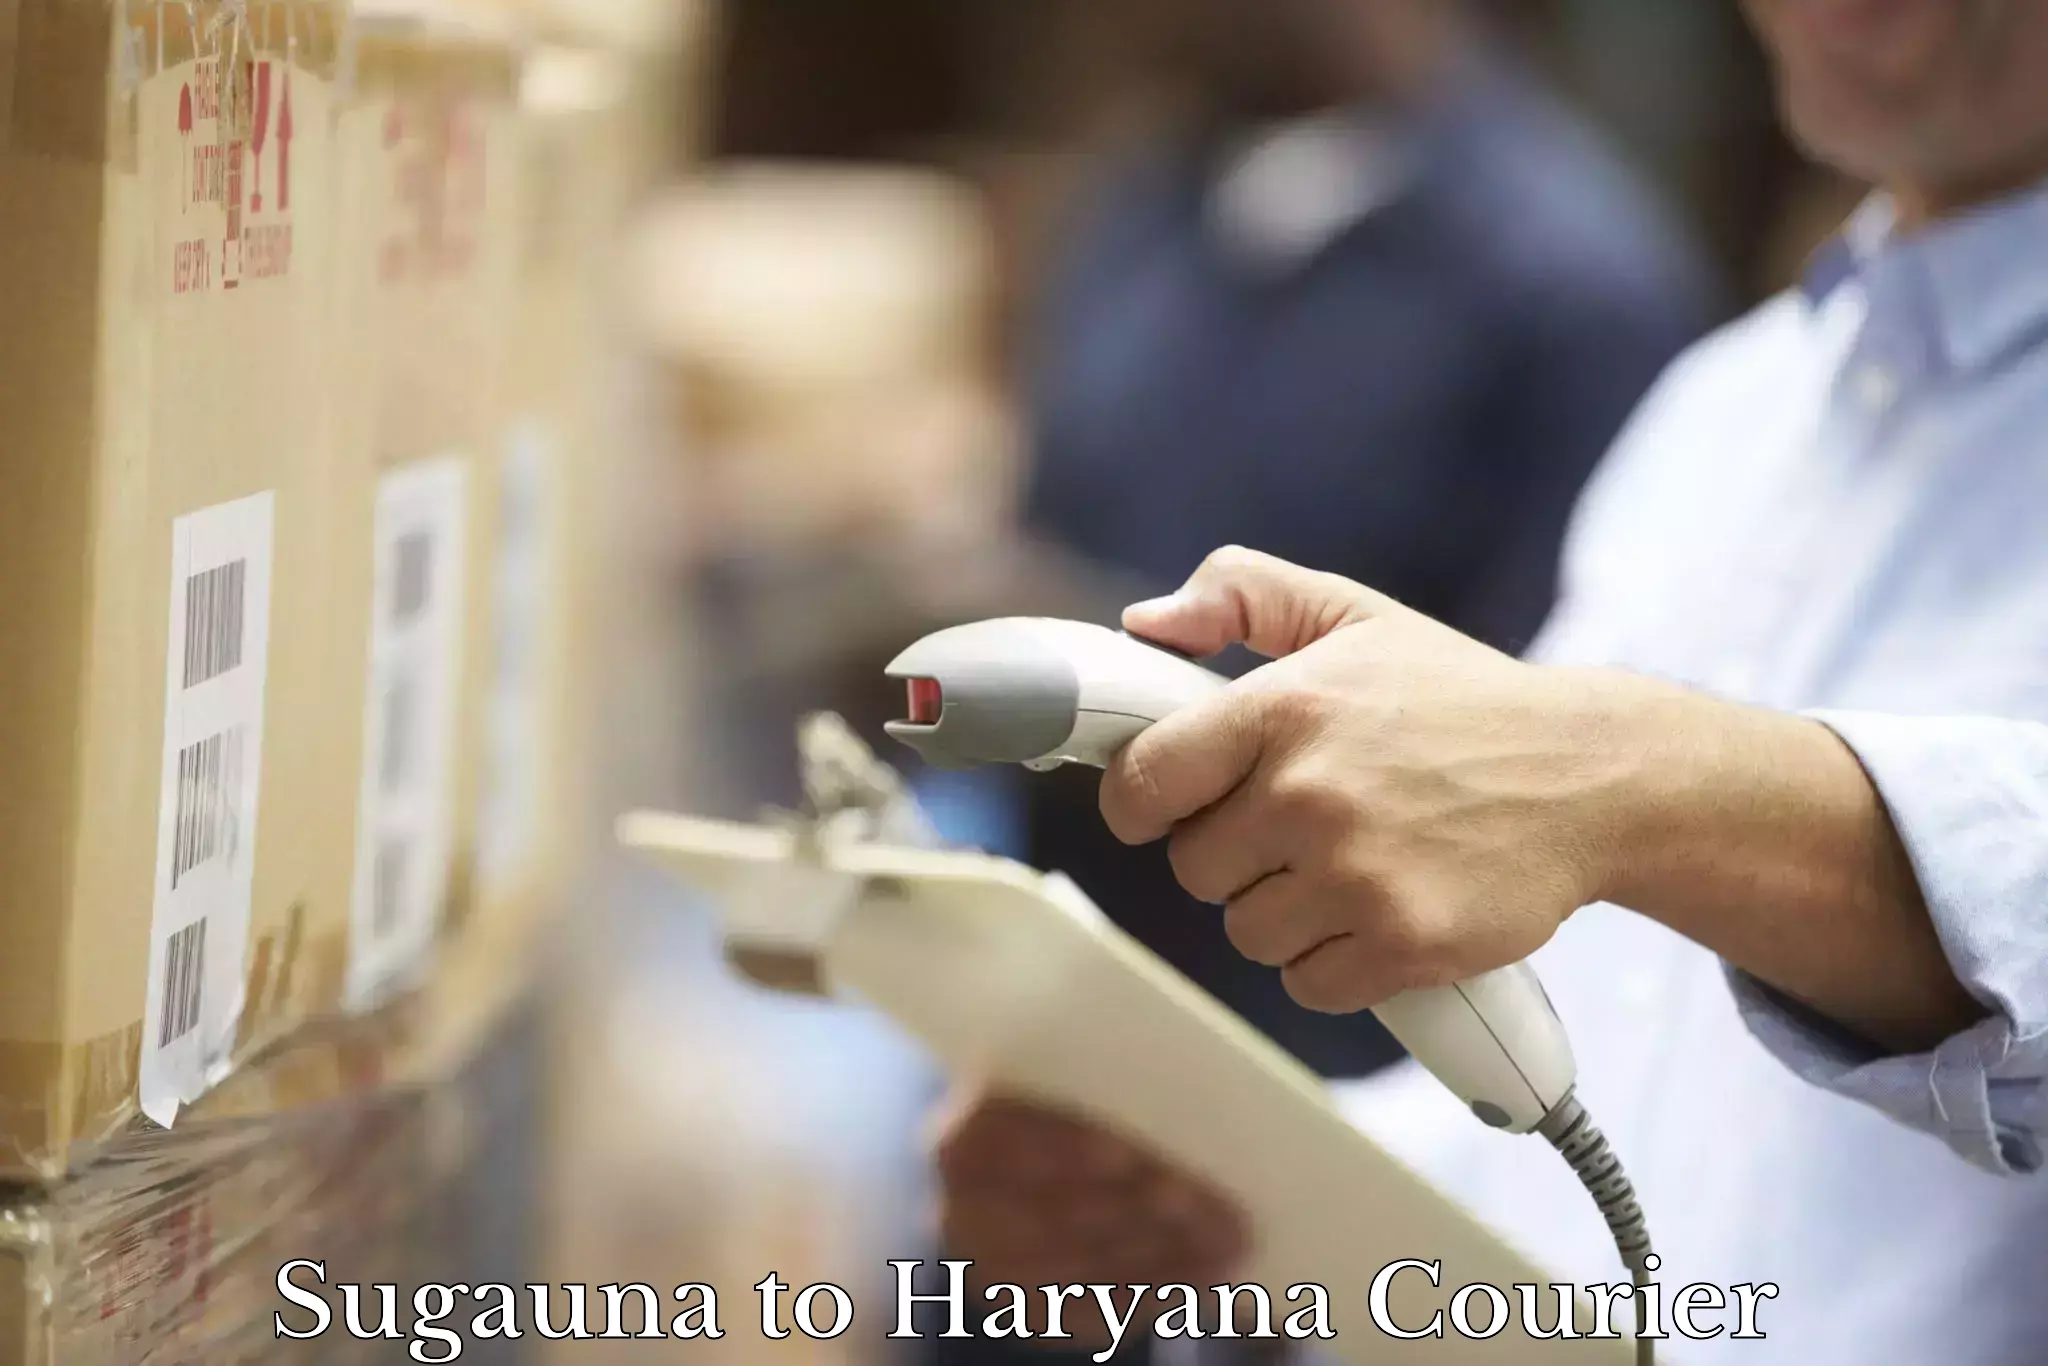 Courier app Sugauna to Chaudhary Charan Singh Haryana Agricultural University Hisar